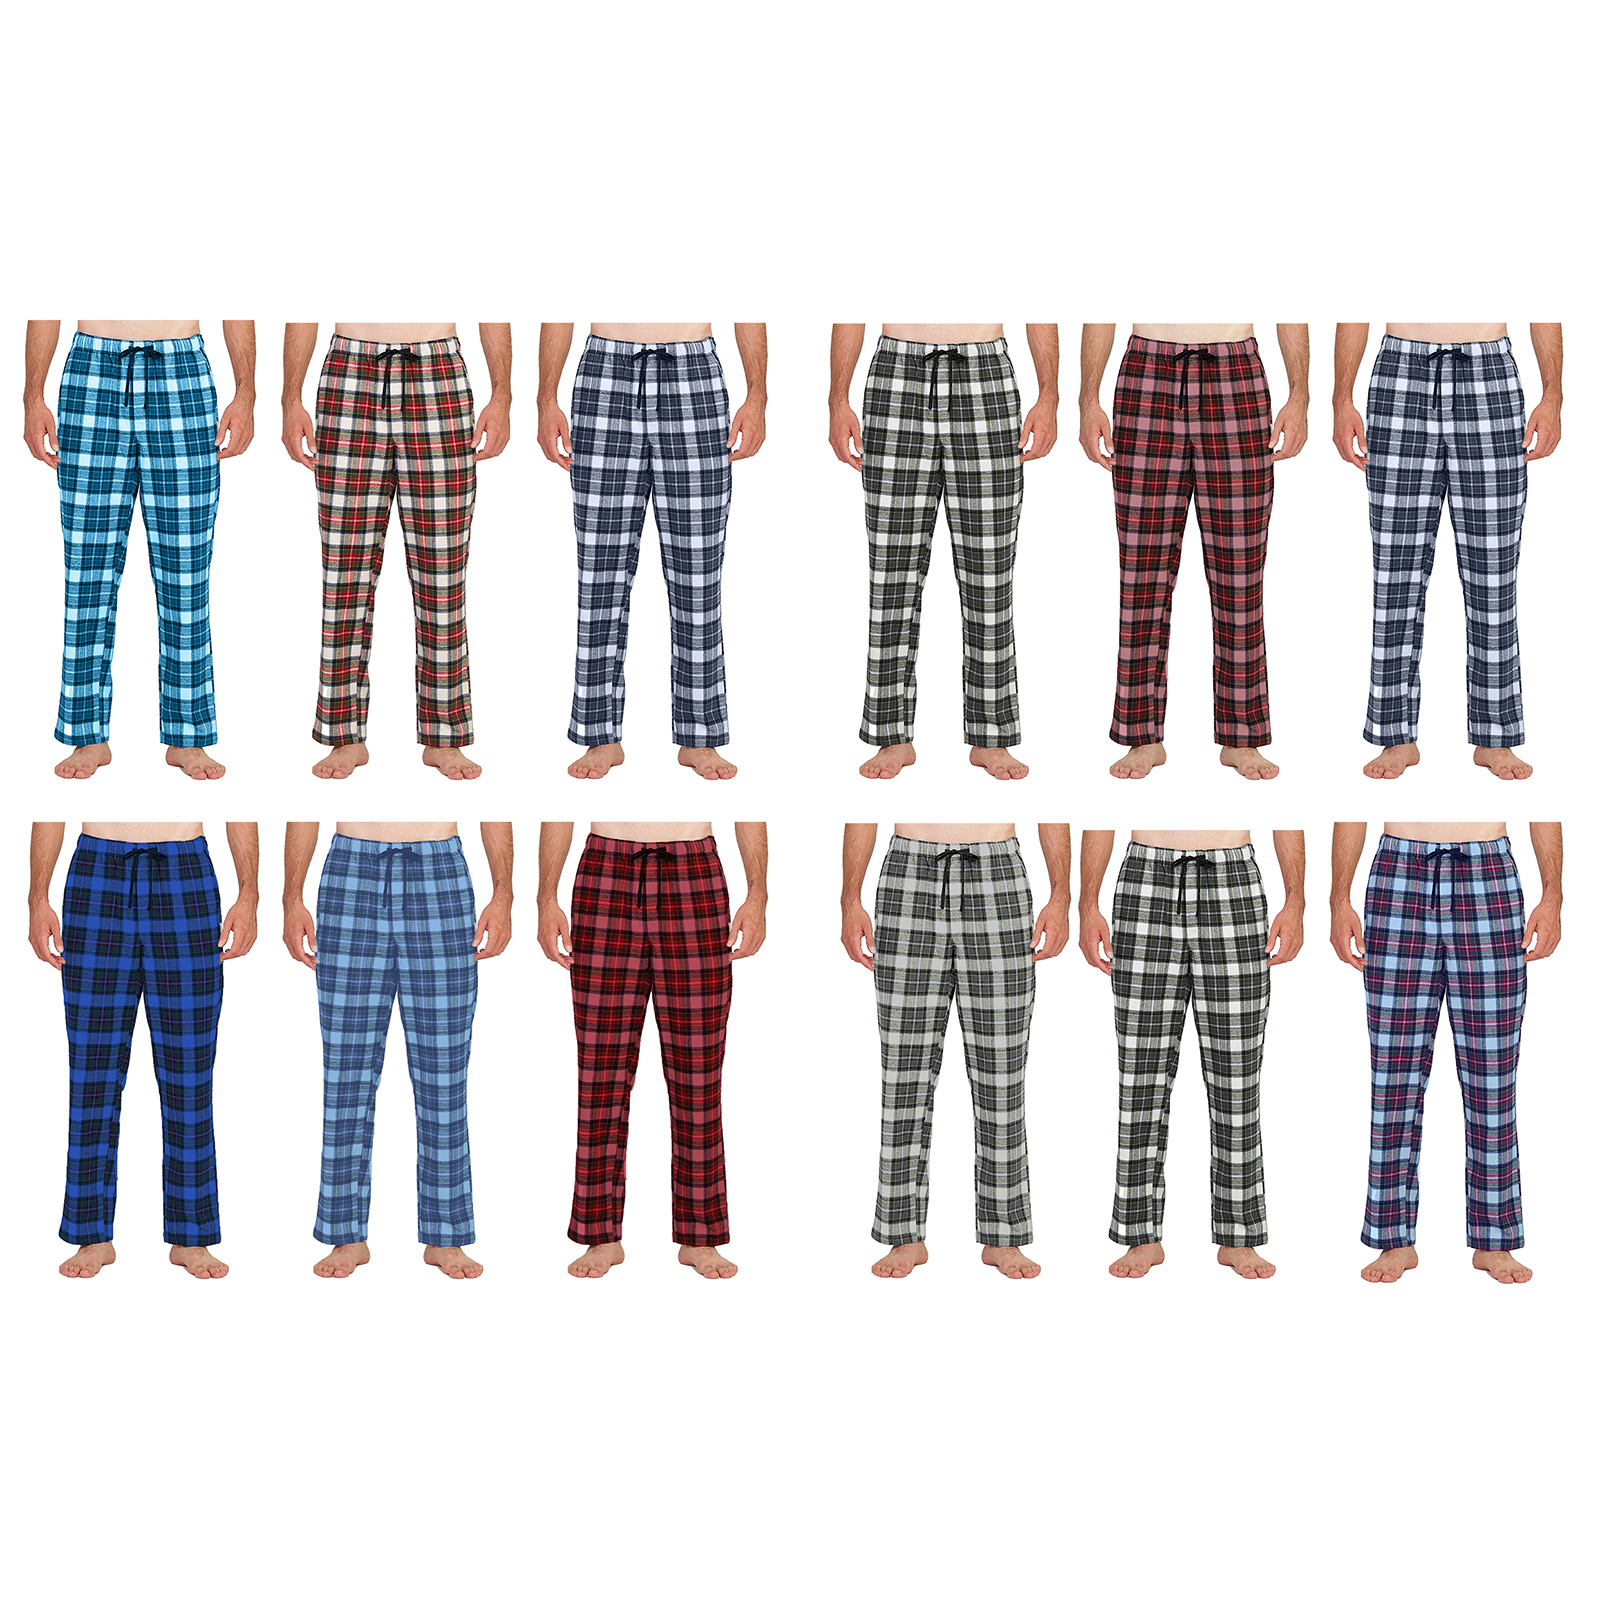 2-Pack: Men's Soft 100% Cotton Flannel Plaid Lounge Pajama Sleep Pants - Small